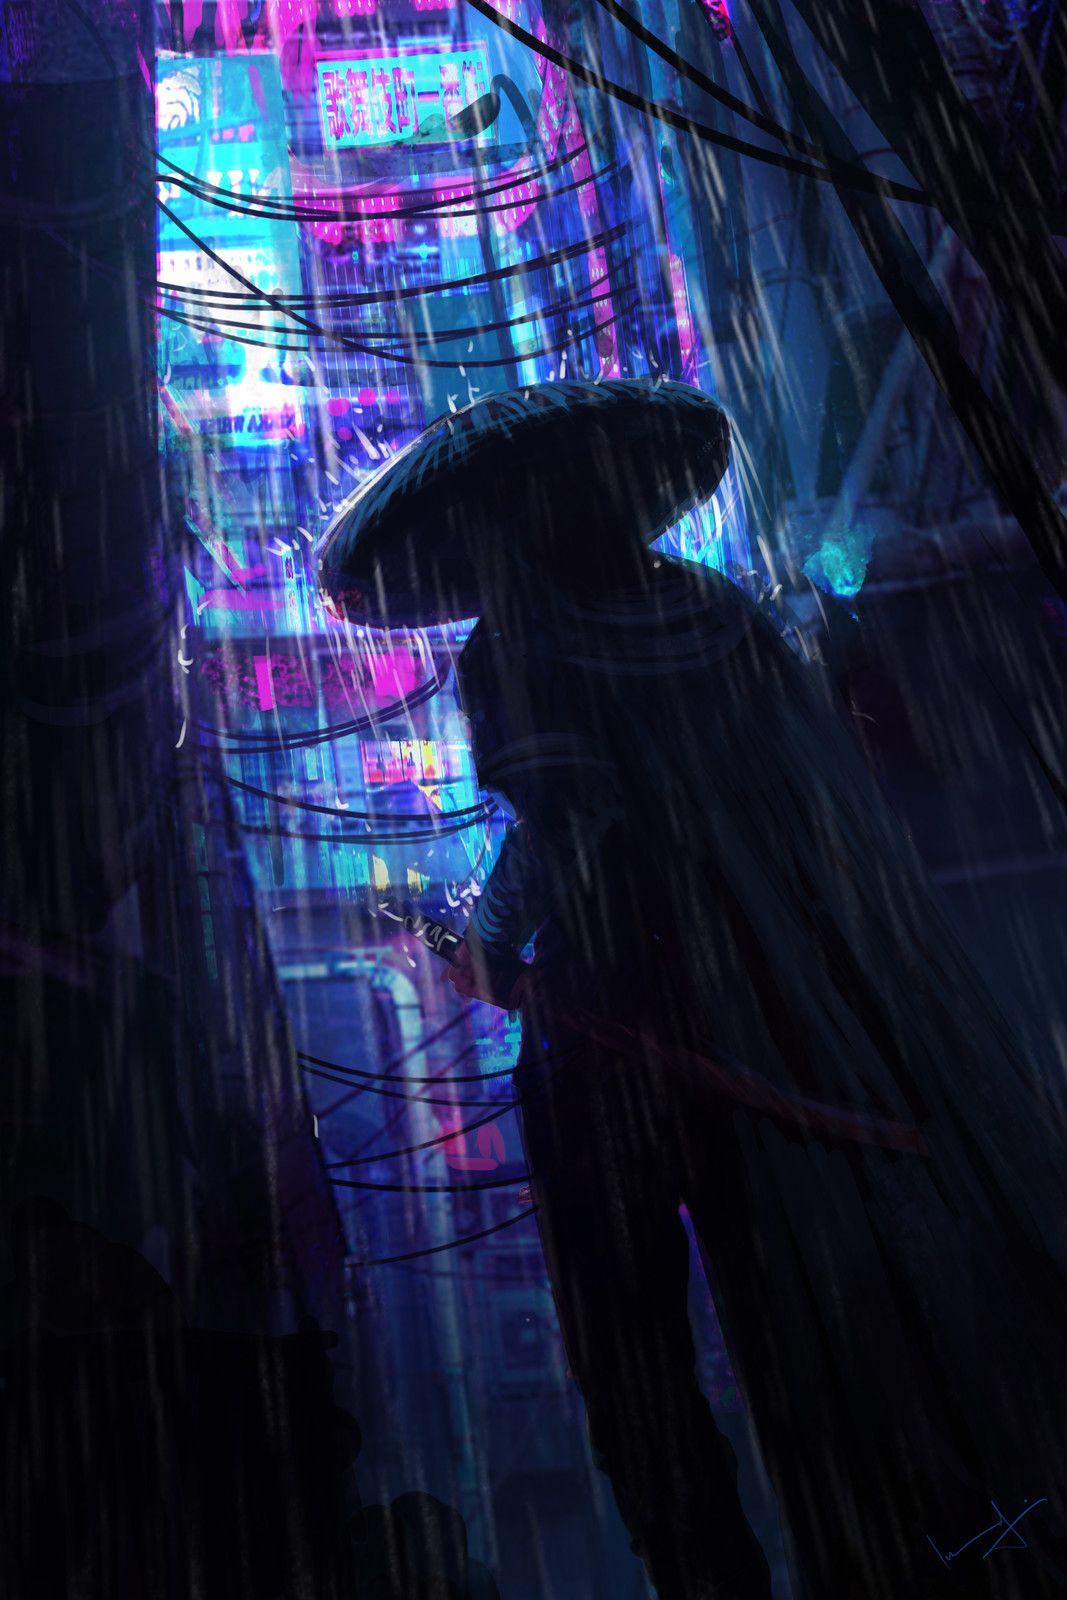 Buy Cyberpunk Samurai 3 Neon Future City Japan Art Digital Online in India   Etsy